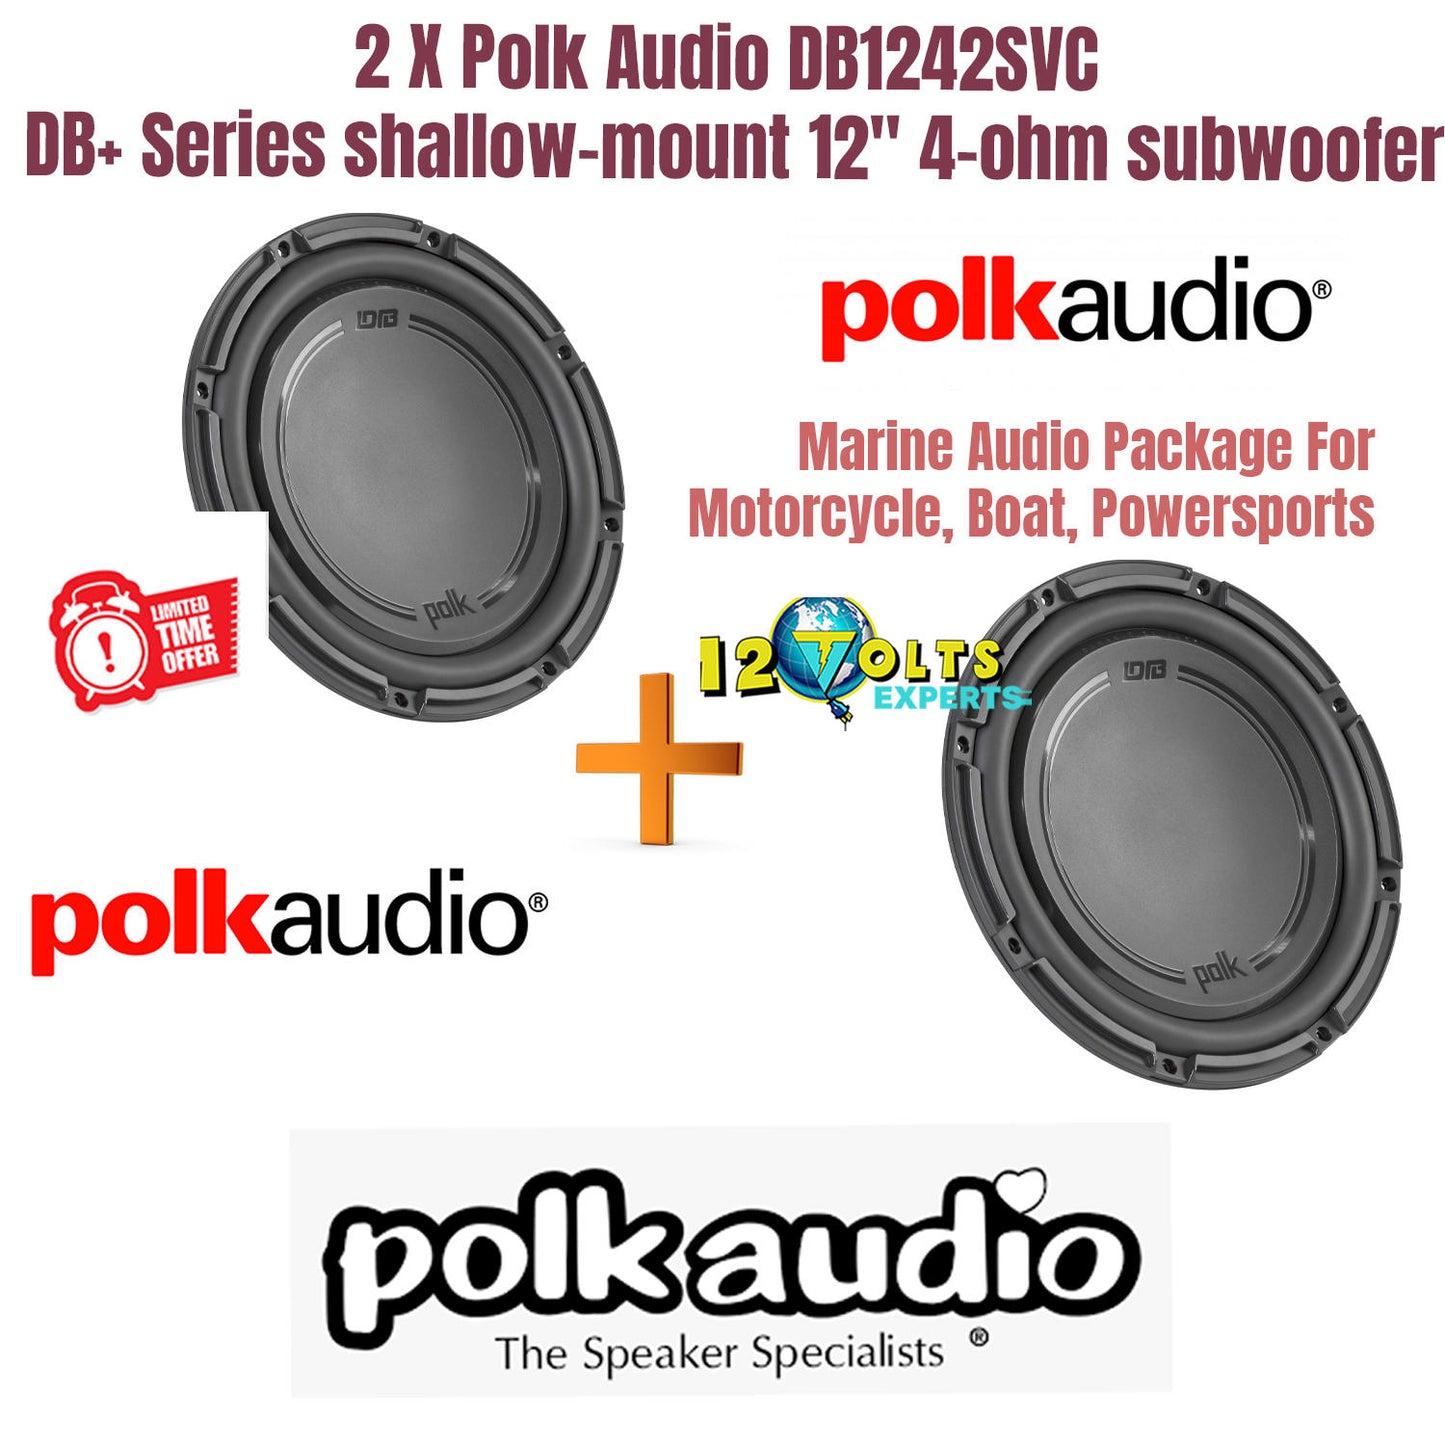 2 X Polk Audio DB1242SVC DB+ Series shallow-mount 12" 4-ohm subwoofer